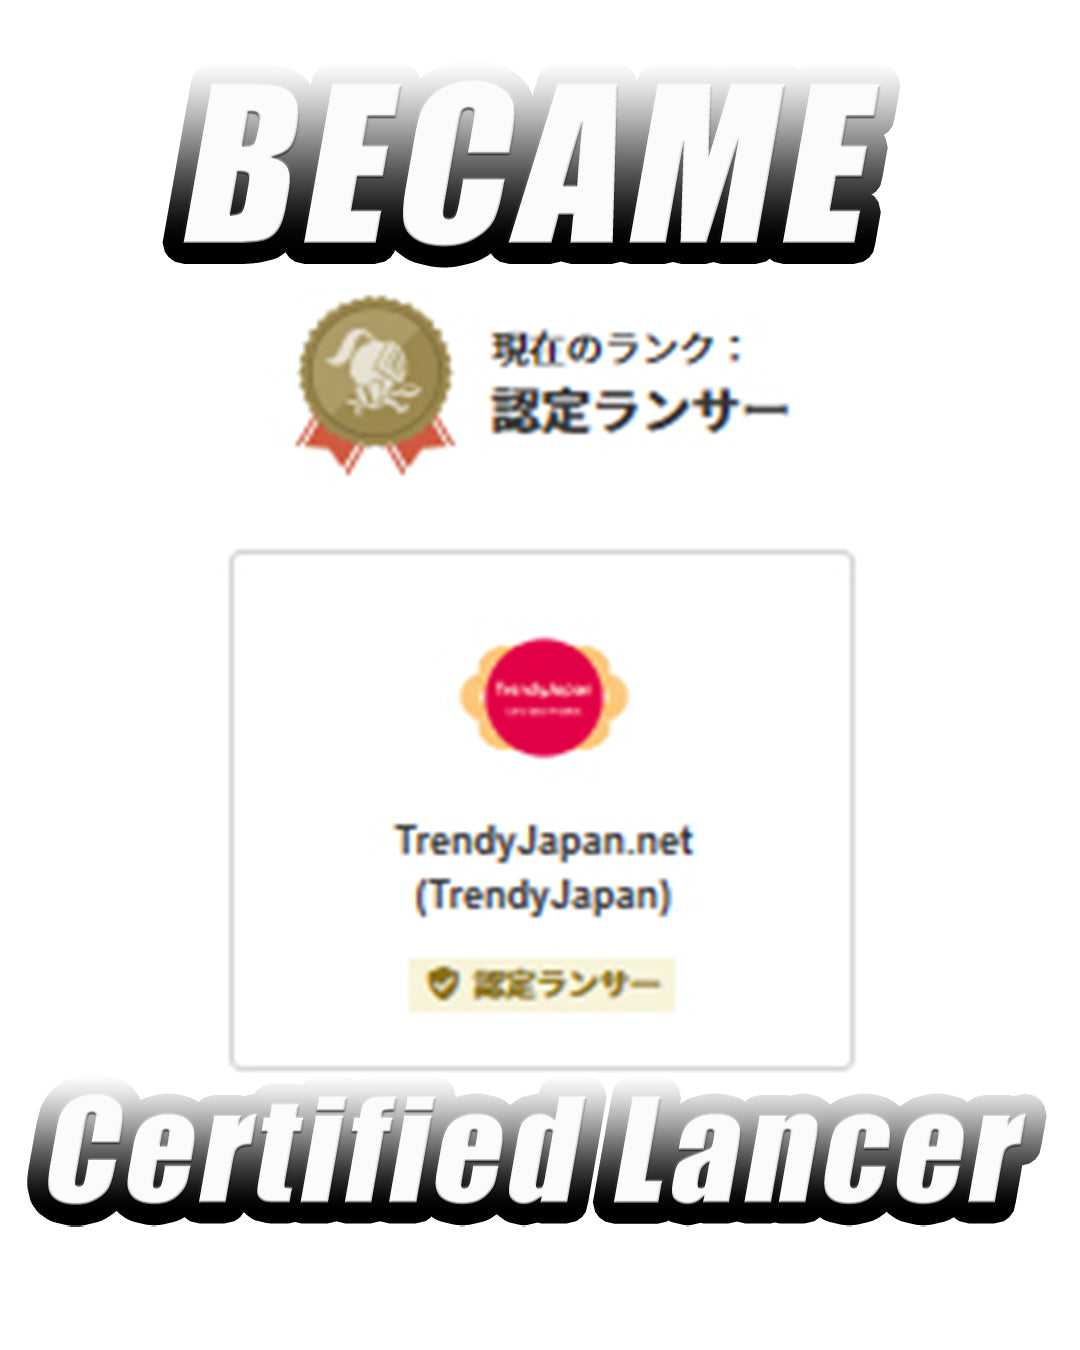 Became We were Certified Lancer at a Major Crowdsourcing Company!